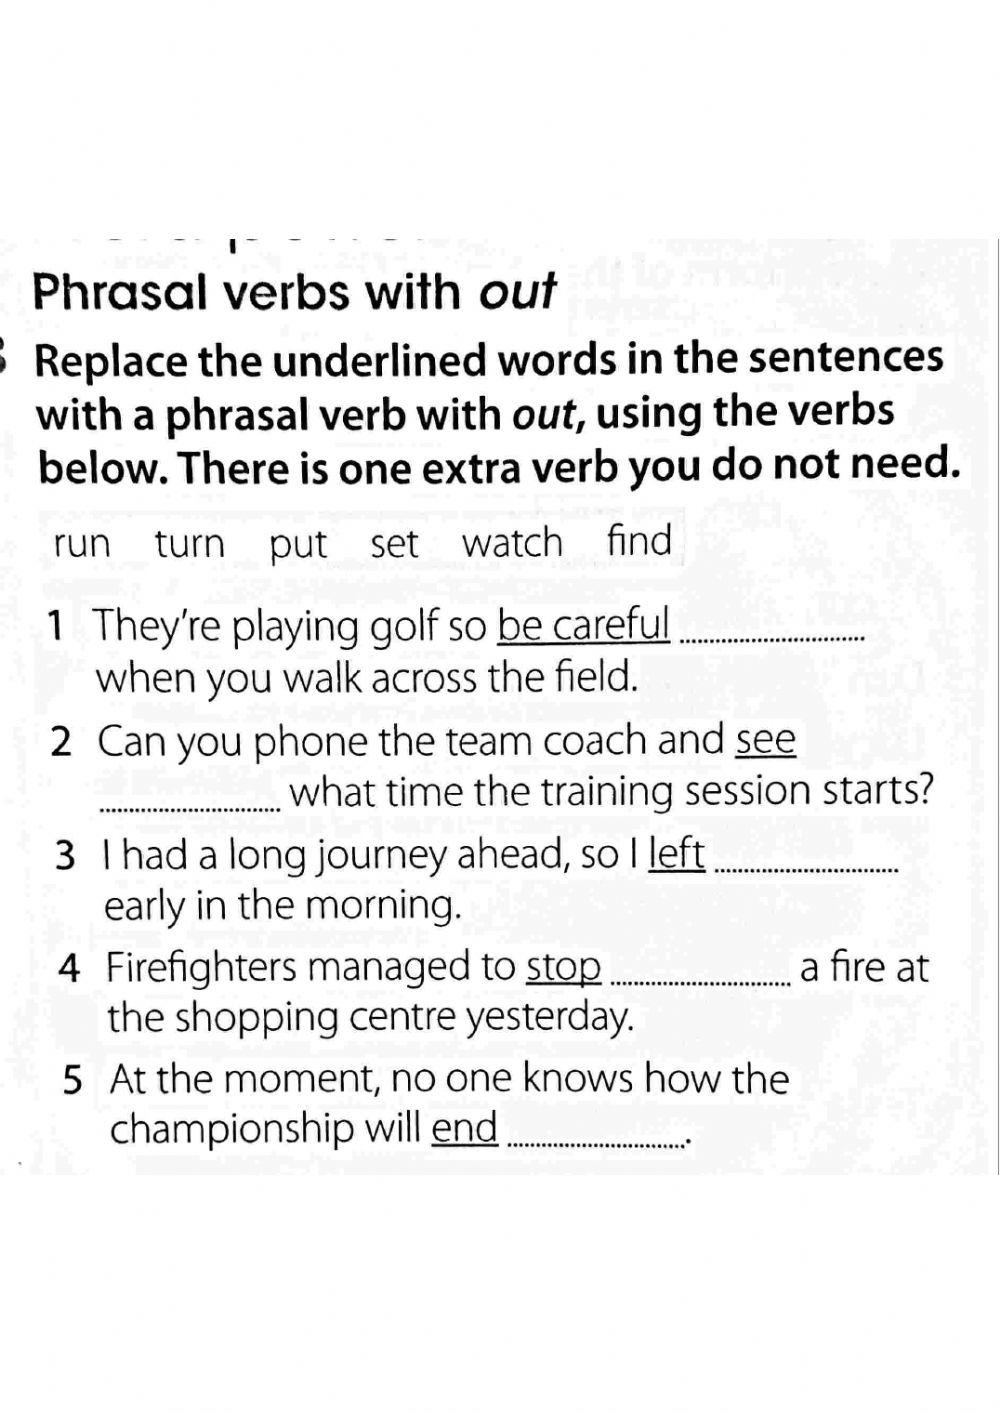 Some phrasal verbs